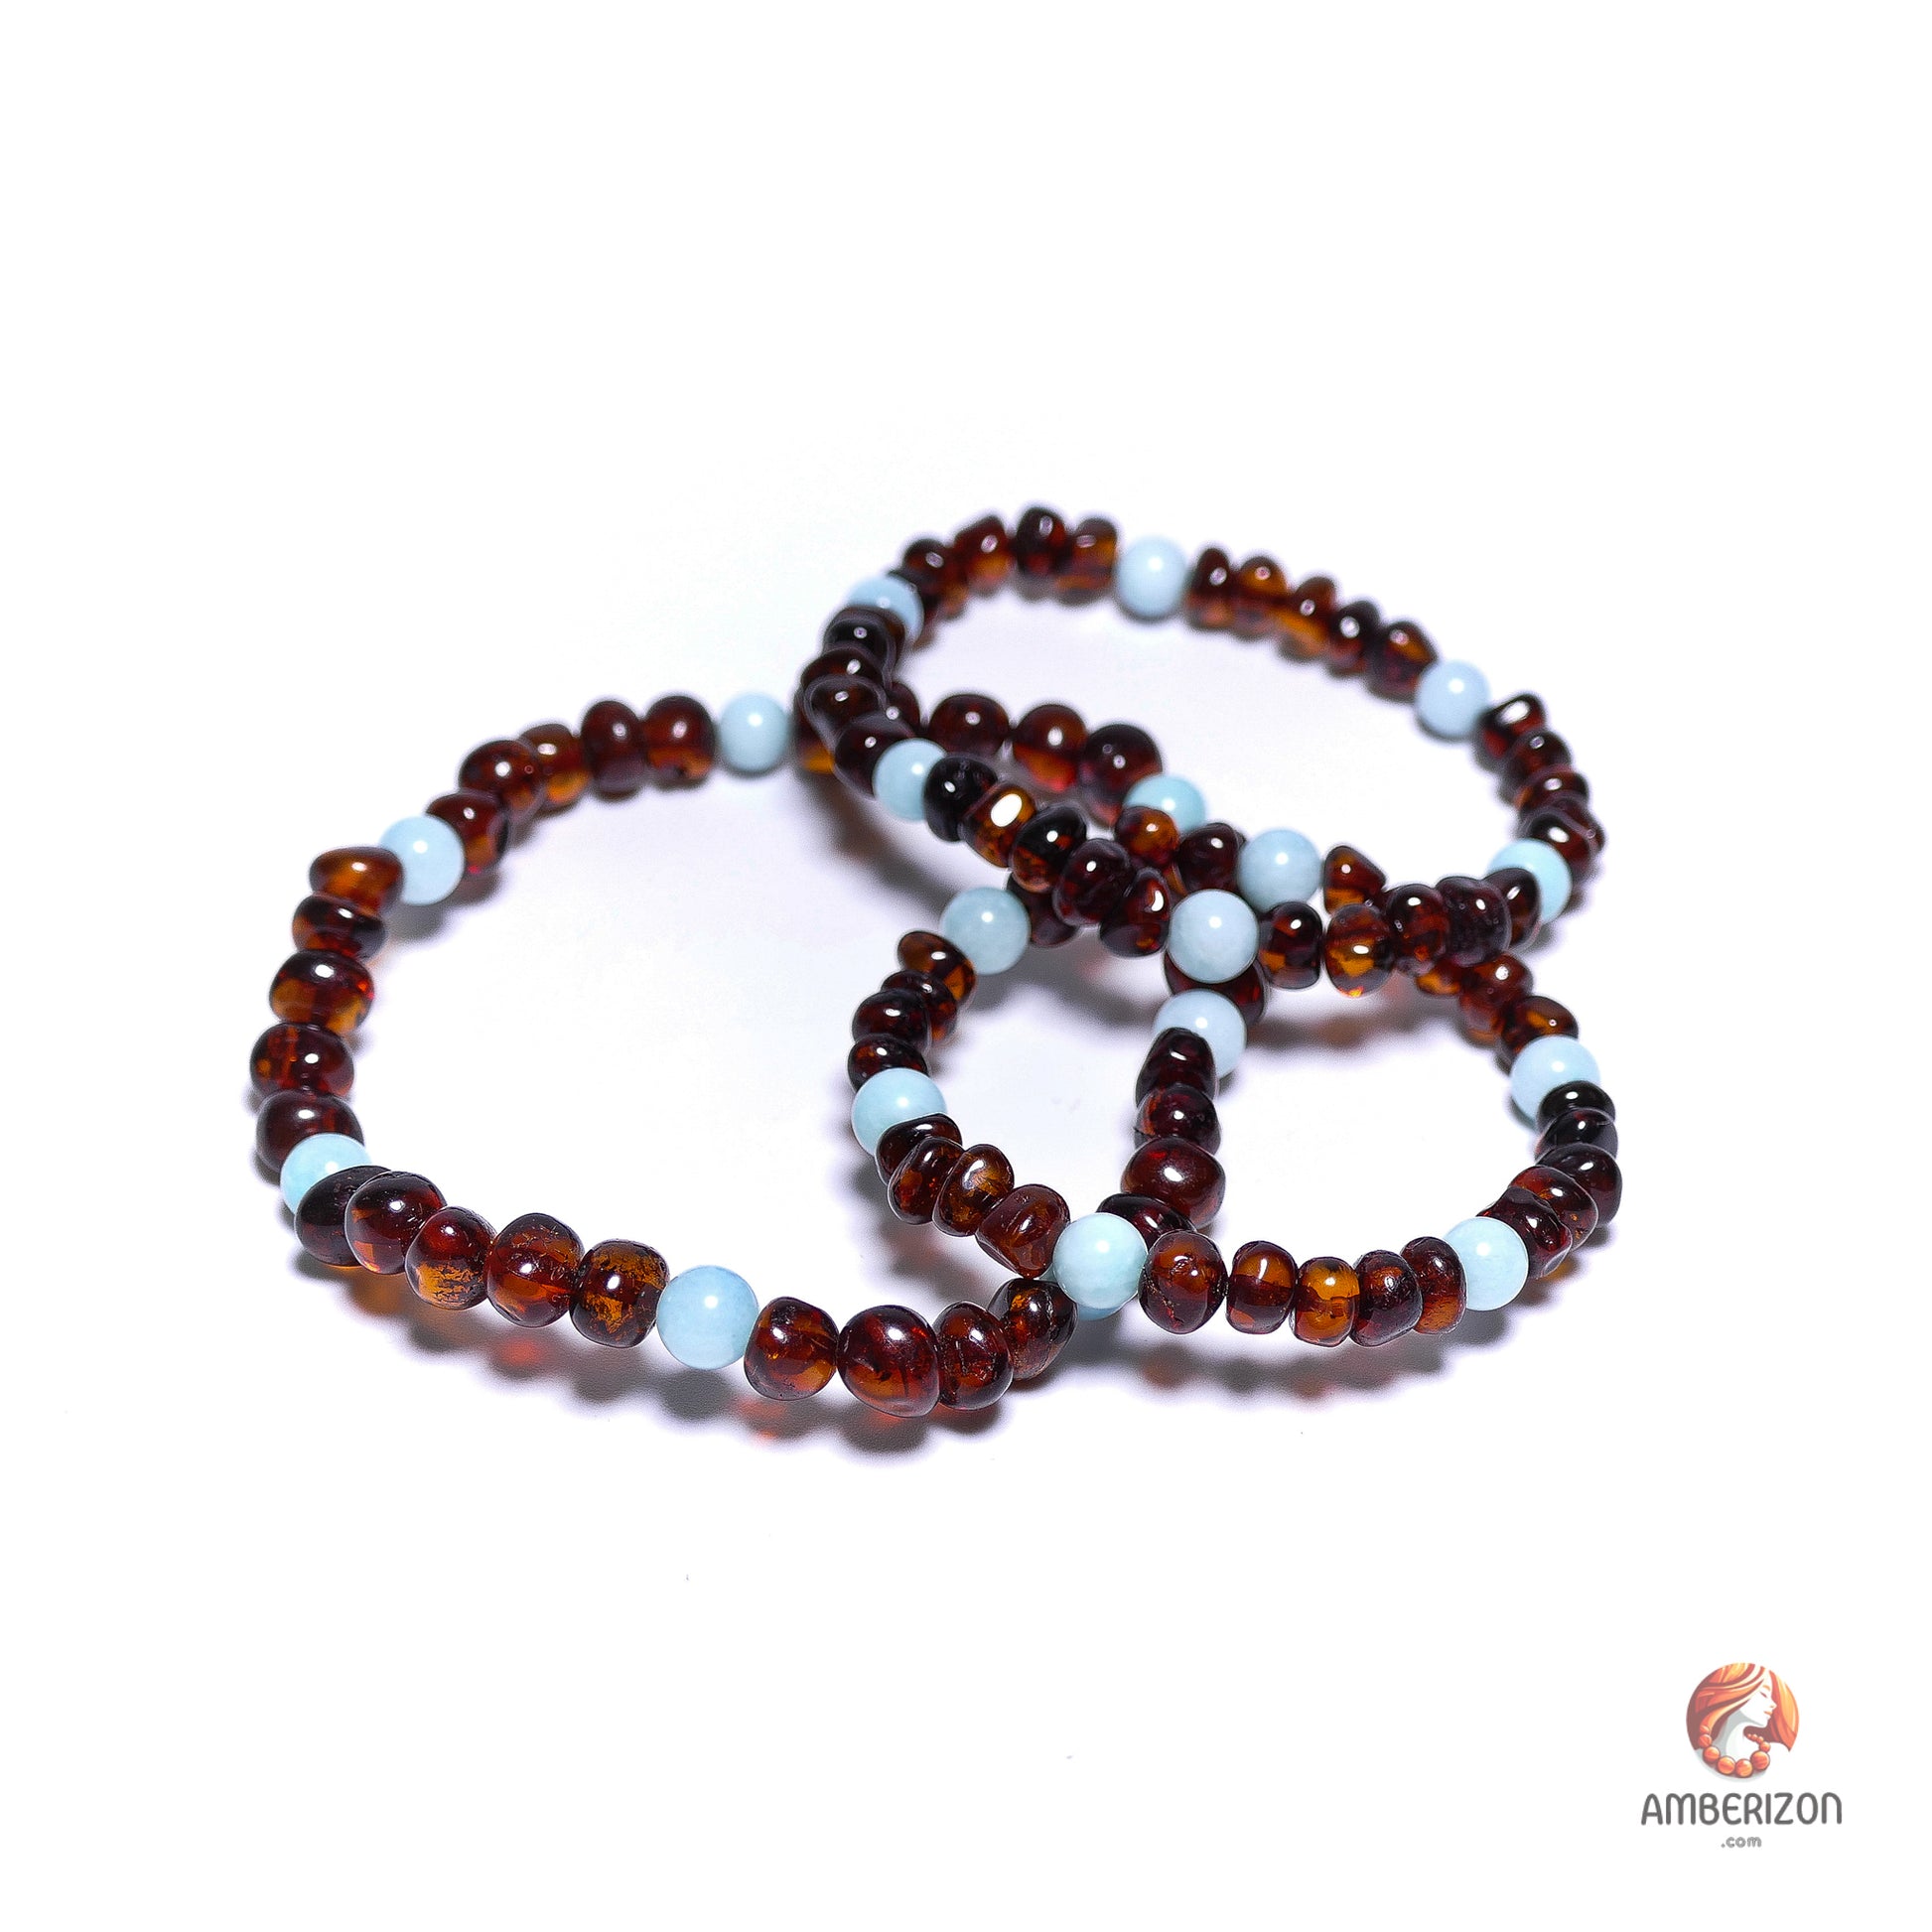 Baltic polished amber bracelet - Polished translucent baroque beads - Stretchy